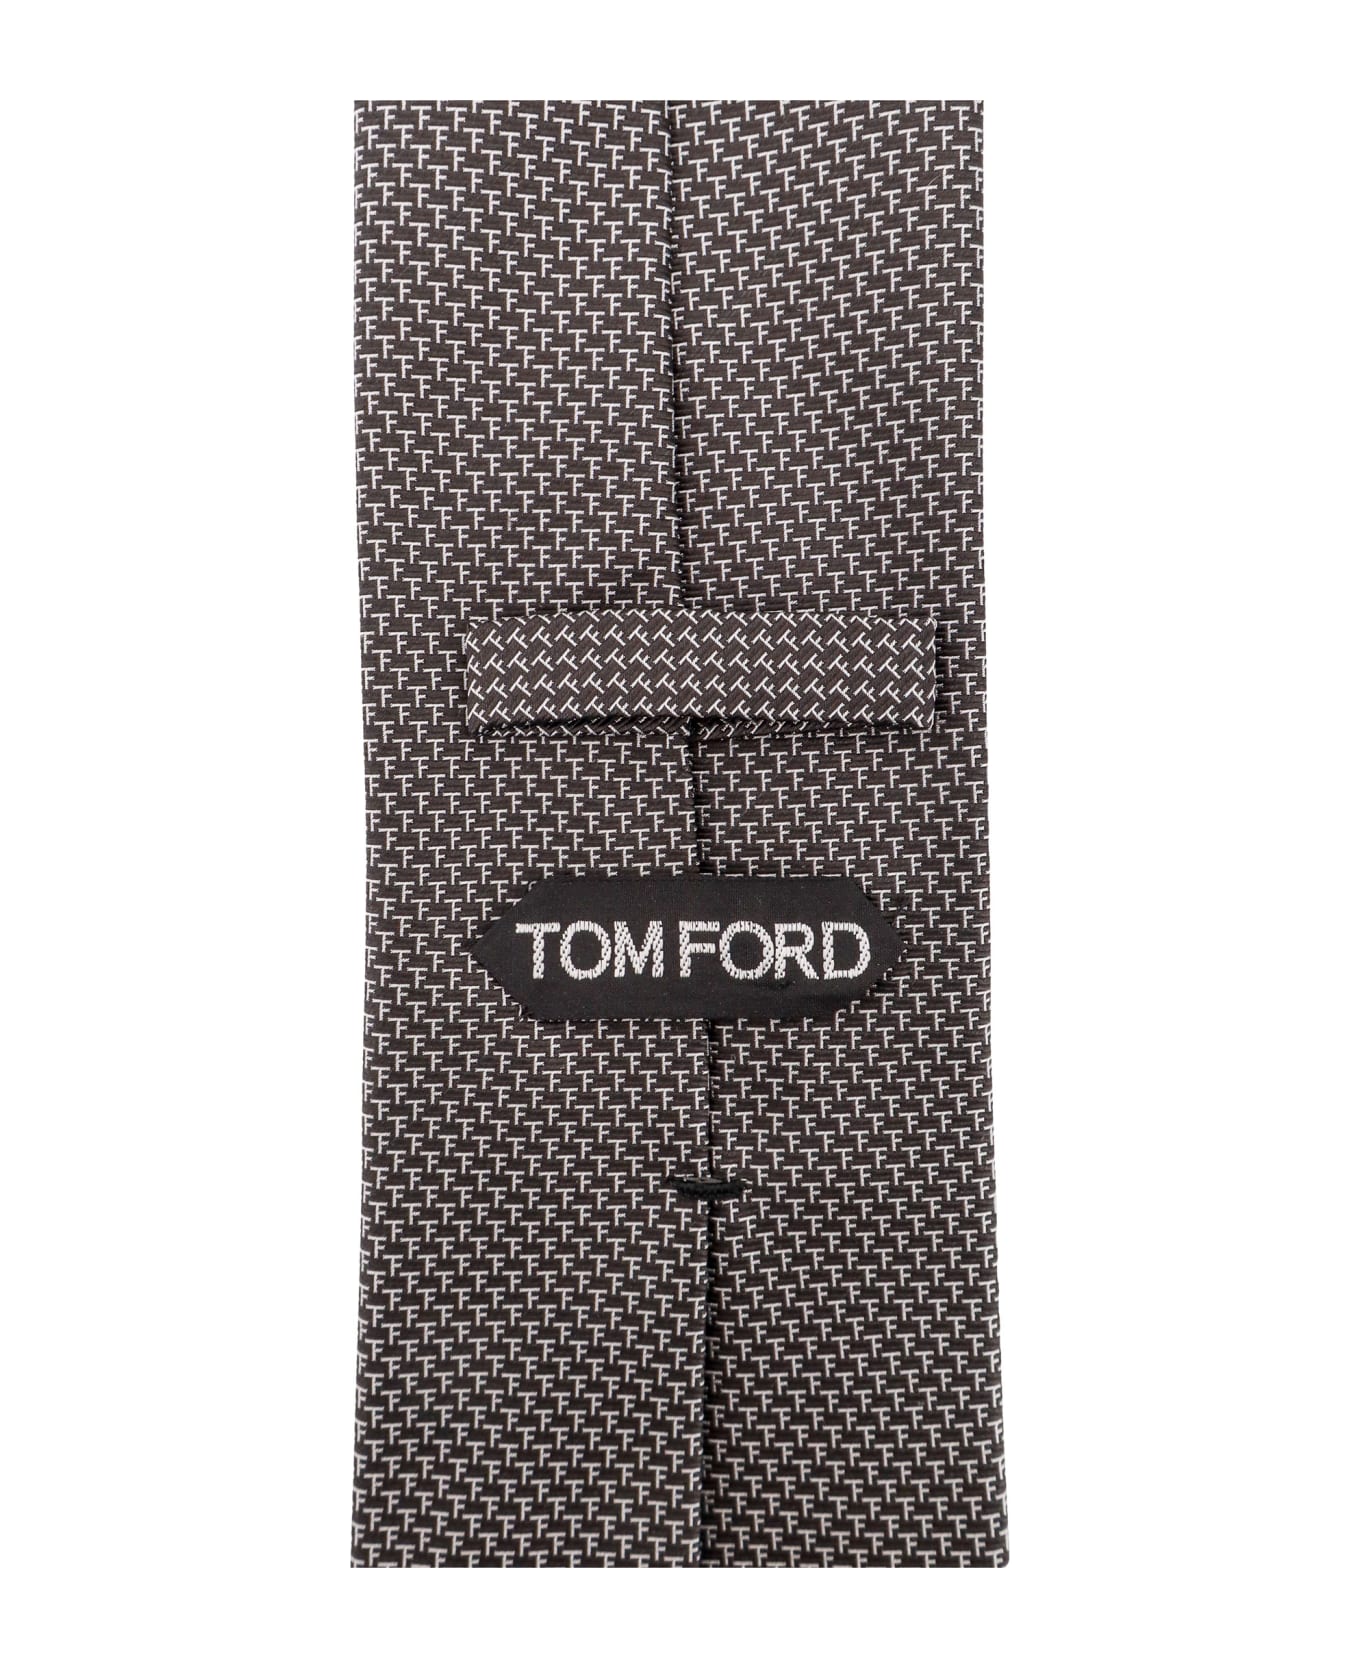 Tom Ford Tie - Black